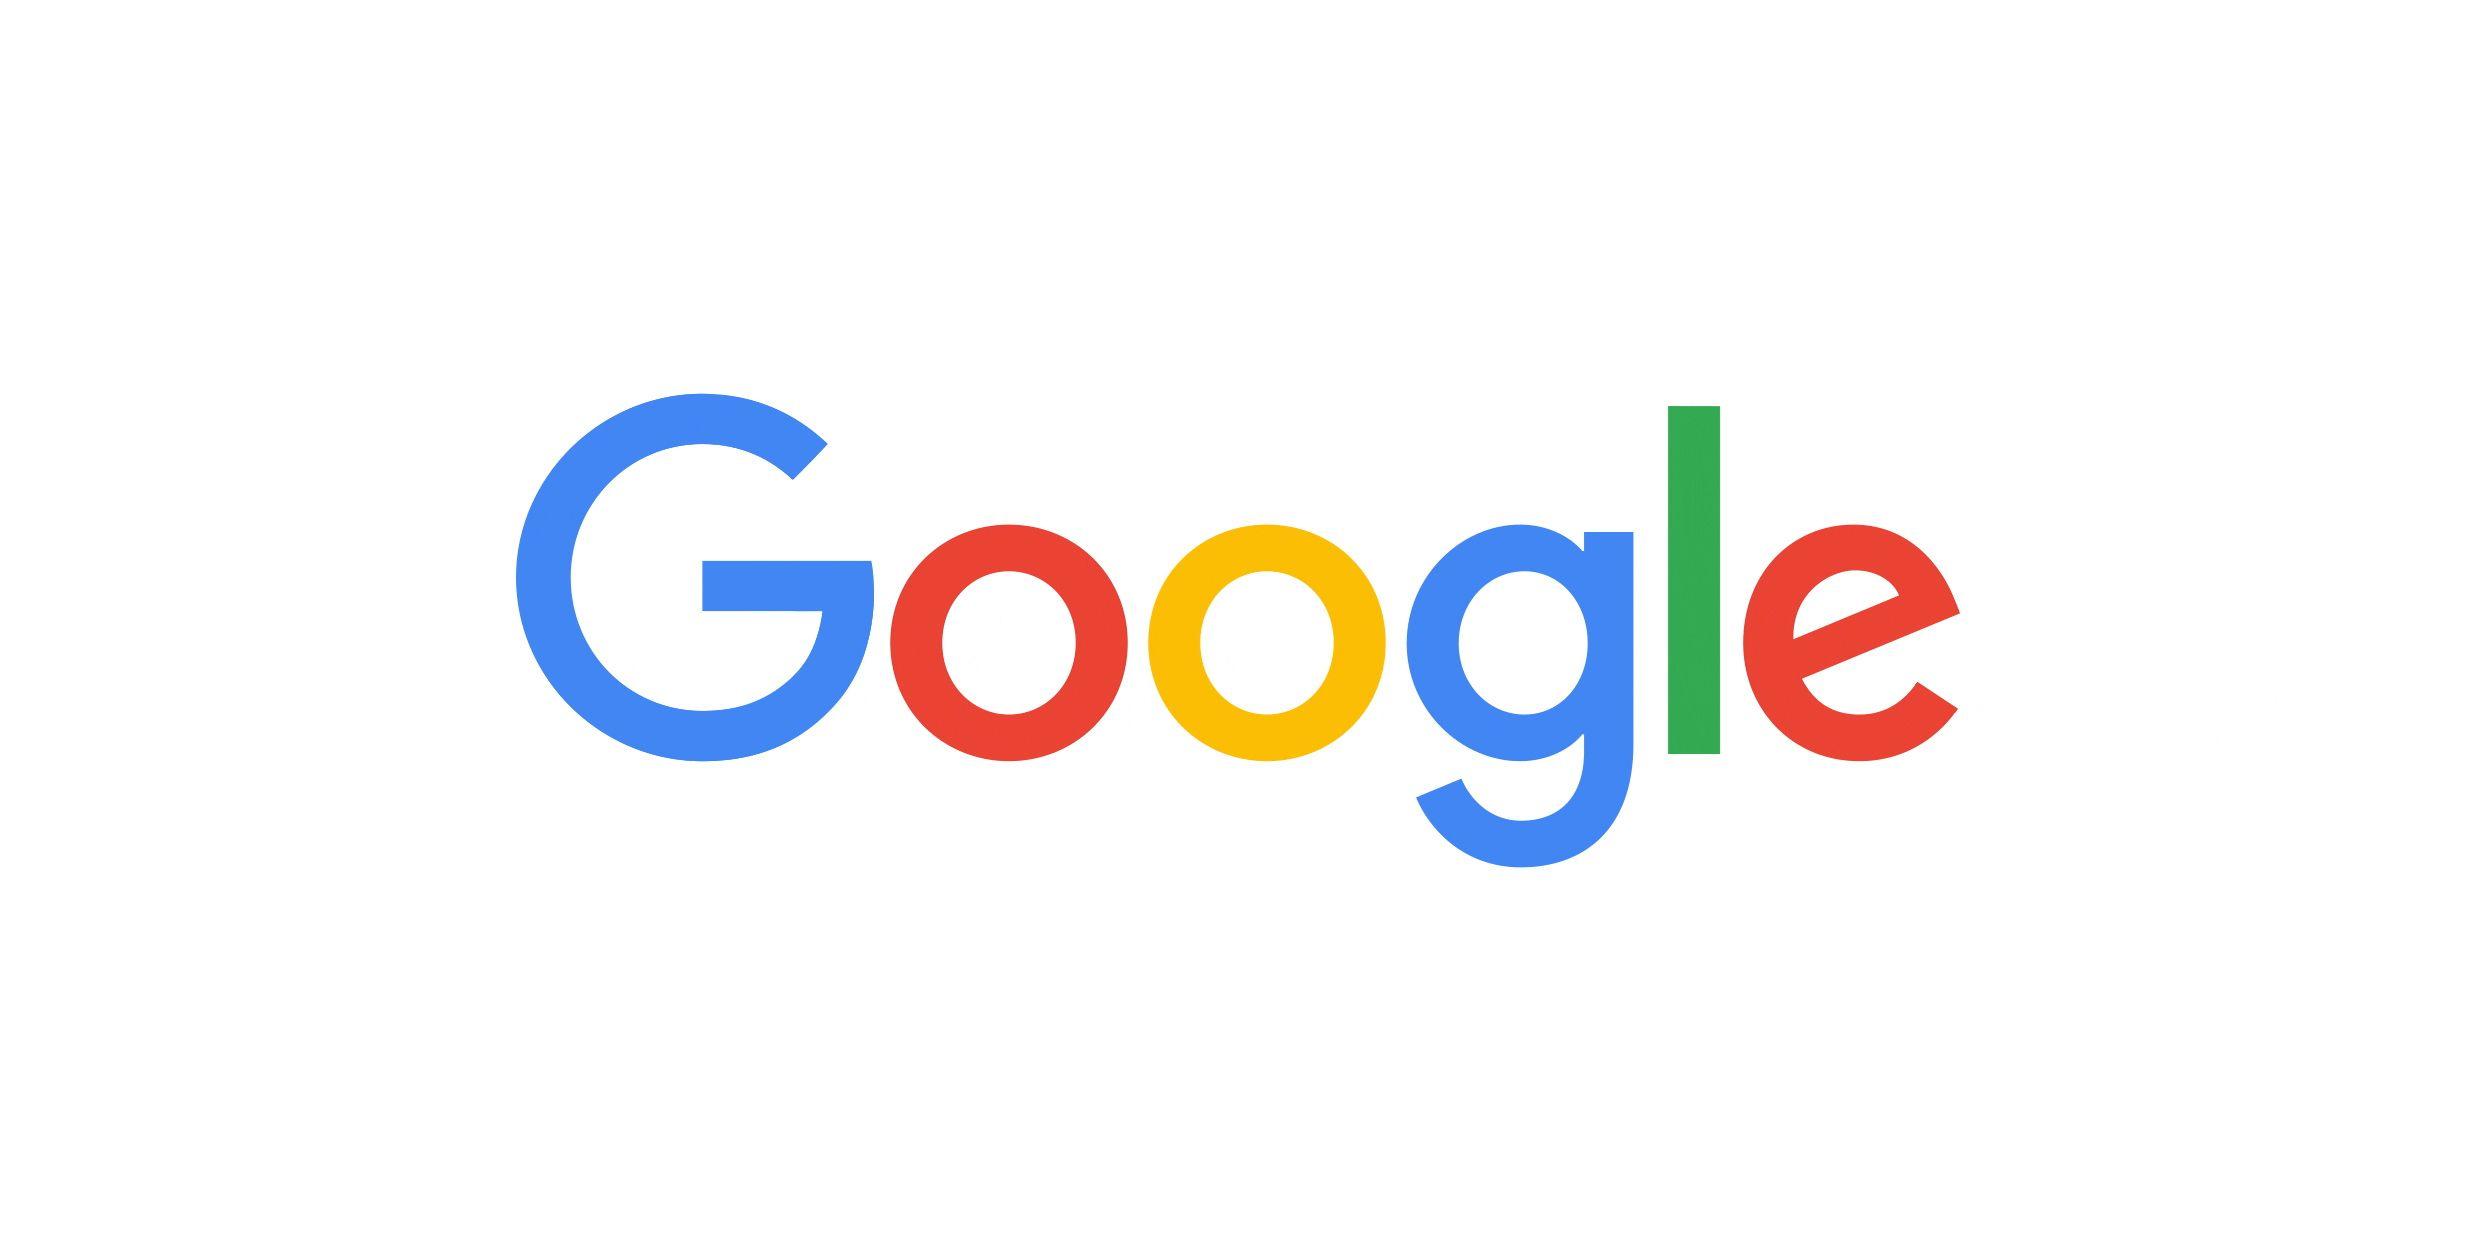 Backgournd for a Cool Rap Logo - Evolving the Google Identity - Library - Google Design